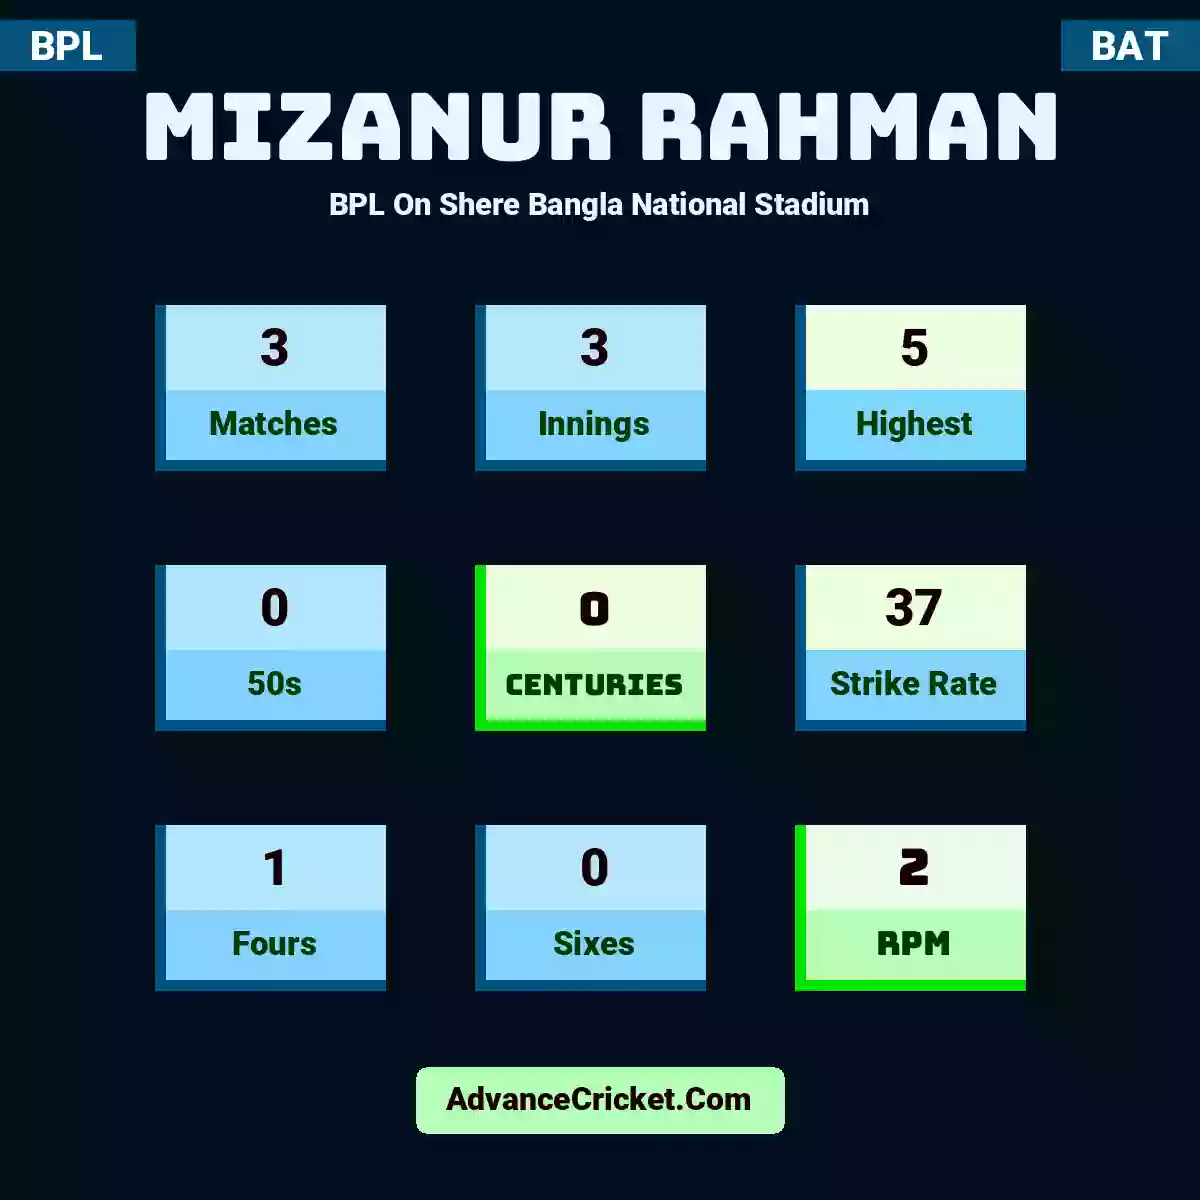 Mizanur Rahman BPL  On Shere Bangla National Stadium, Mizanur Rahman played 3 matches, scored 5 runs as highest, 0 half-centuries, and 0 centuries, with a strike rate of 37. M.Rahman hit 1 fours and 0 sixes, with an RPM of 2.